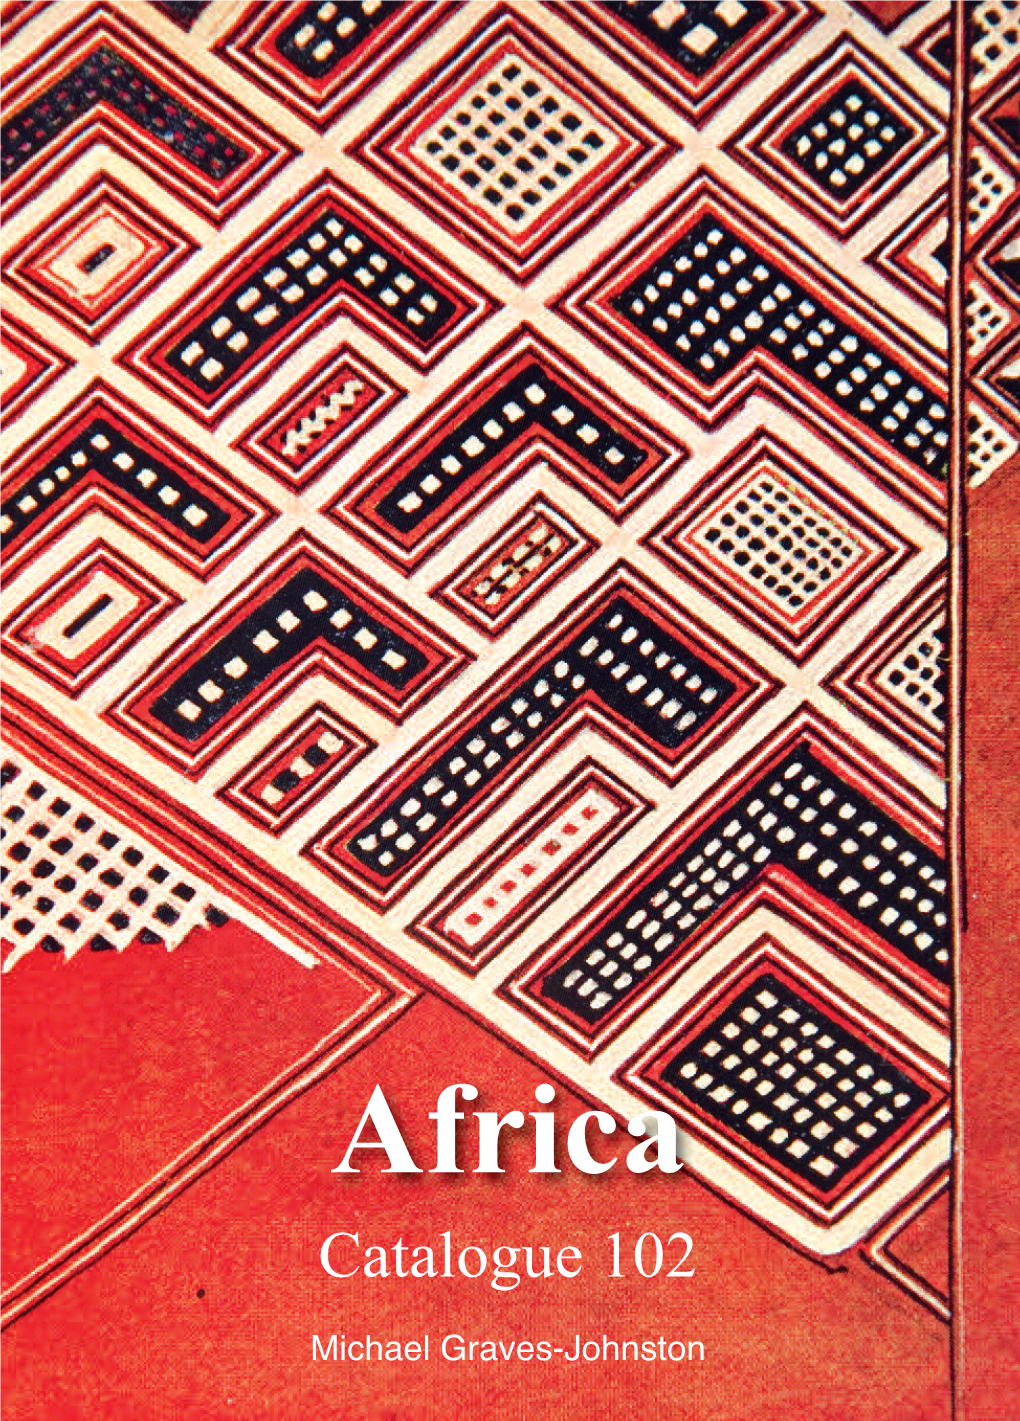 Africa Catalogue 102